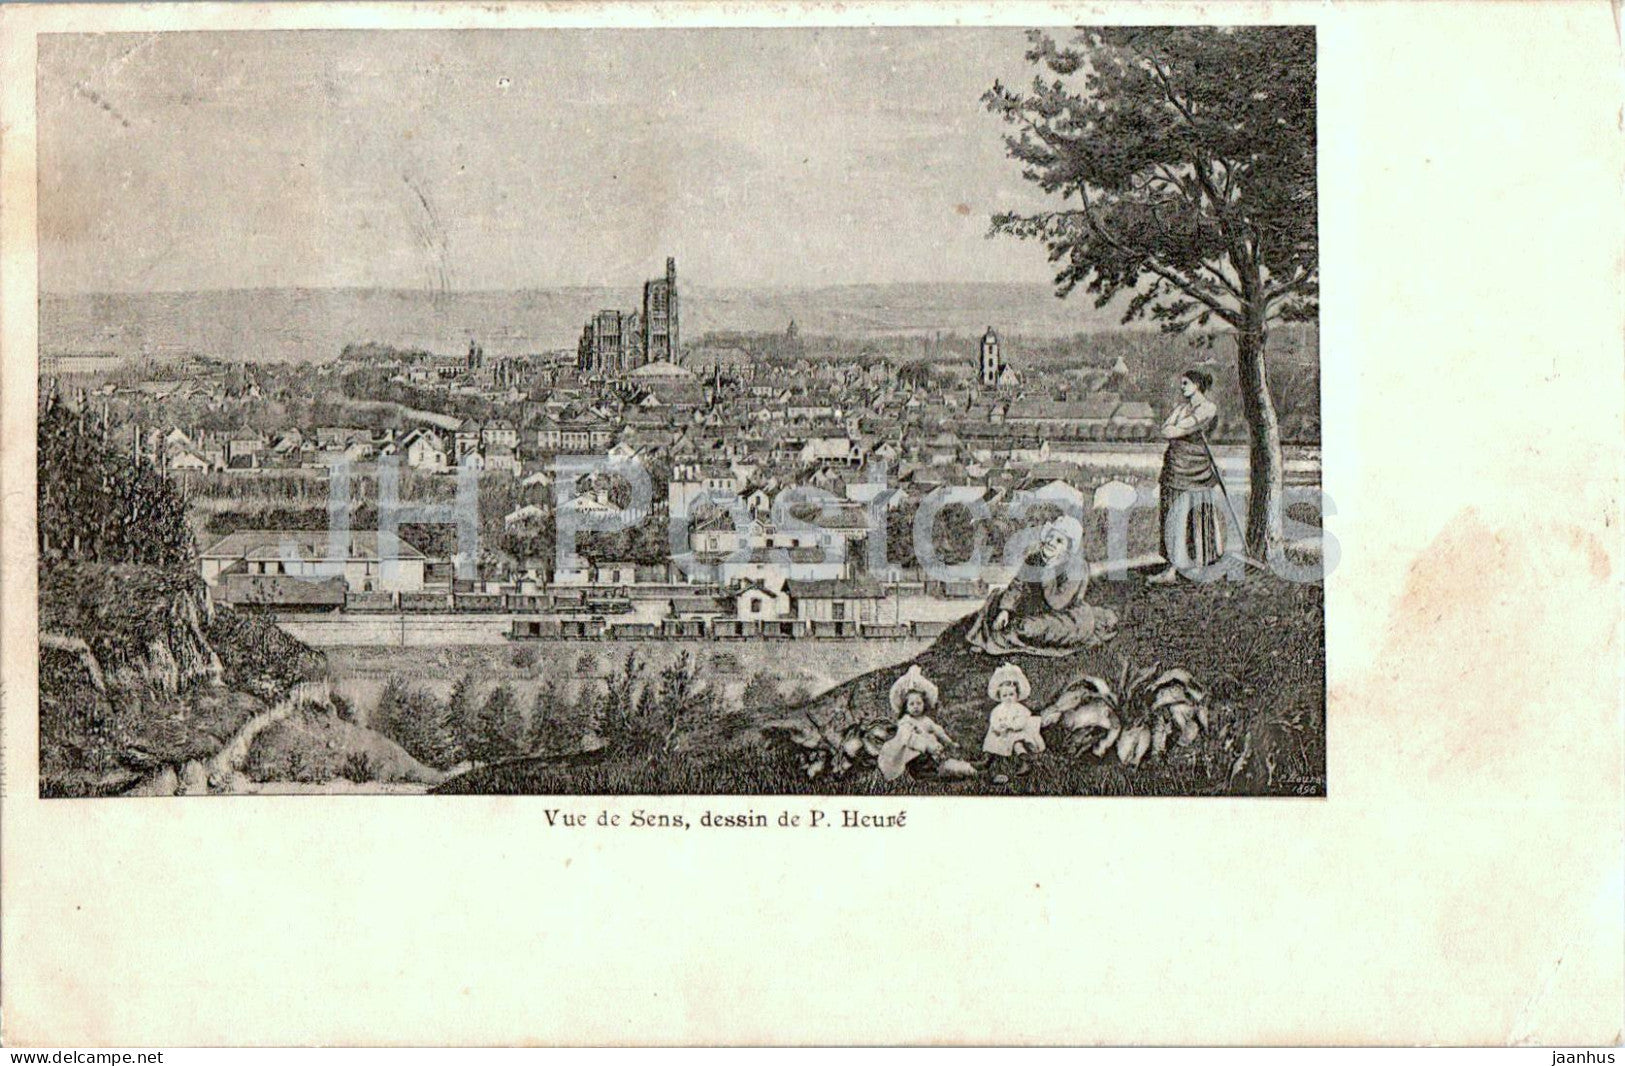 Vue de Sens - dessin de P. Heure - old postcard - 1901 - France - used - JH Postcards